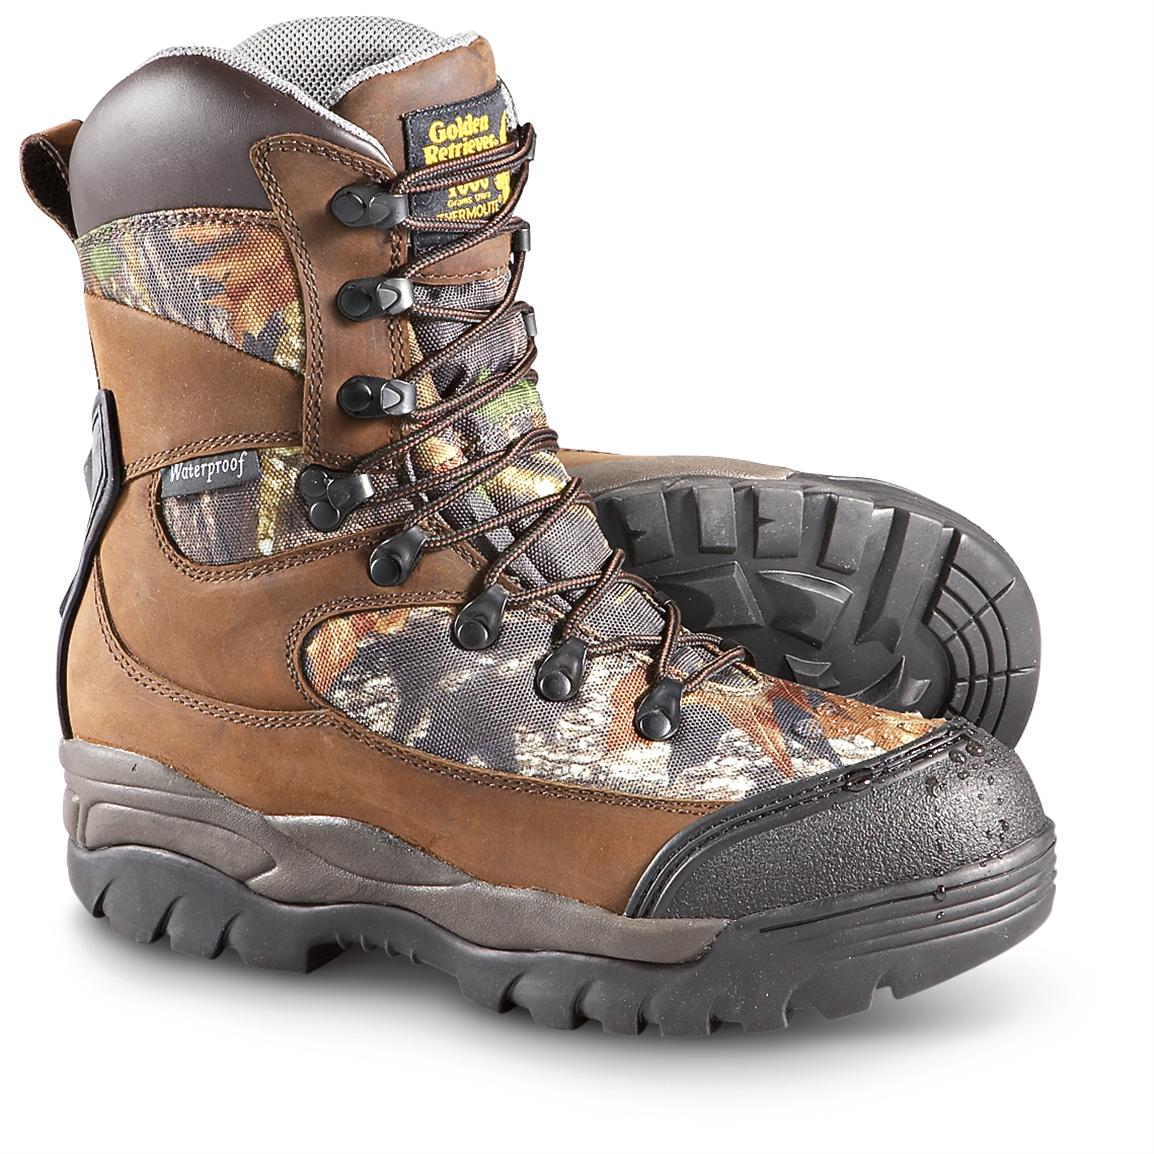 Men's Golden Retriever™ 1,000 gram Waterproof Hunting Boots, Mossy Oak ...